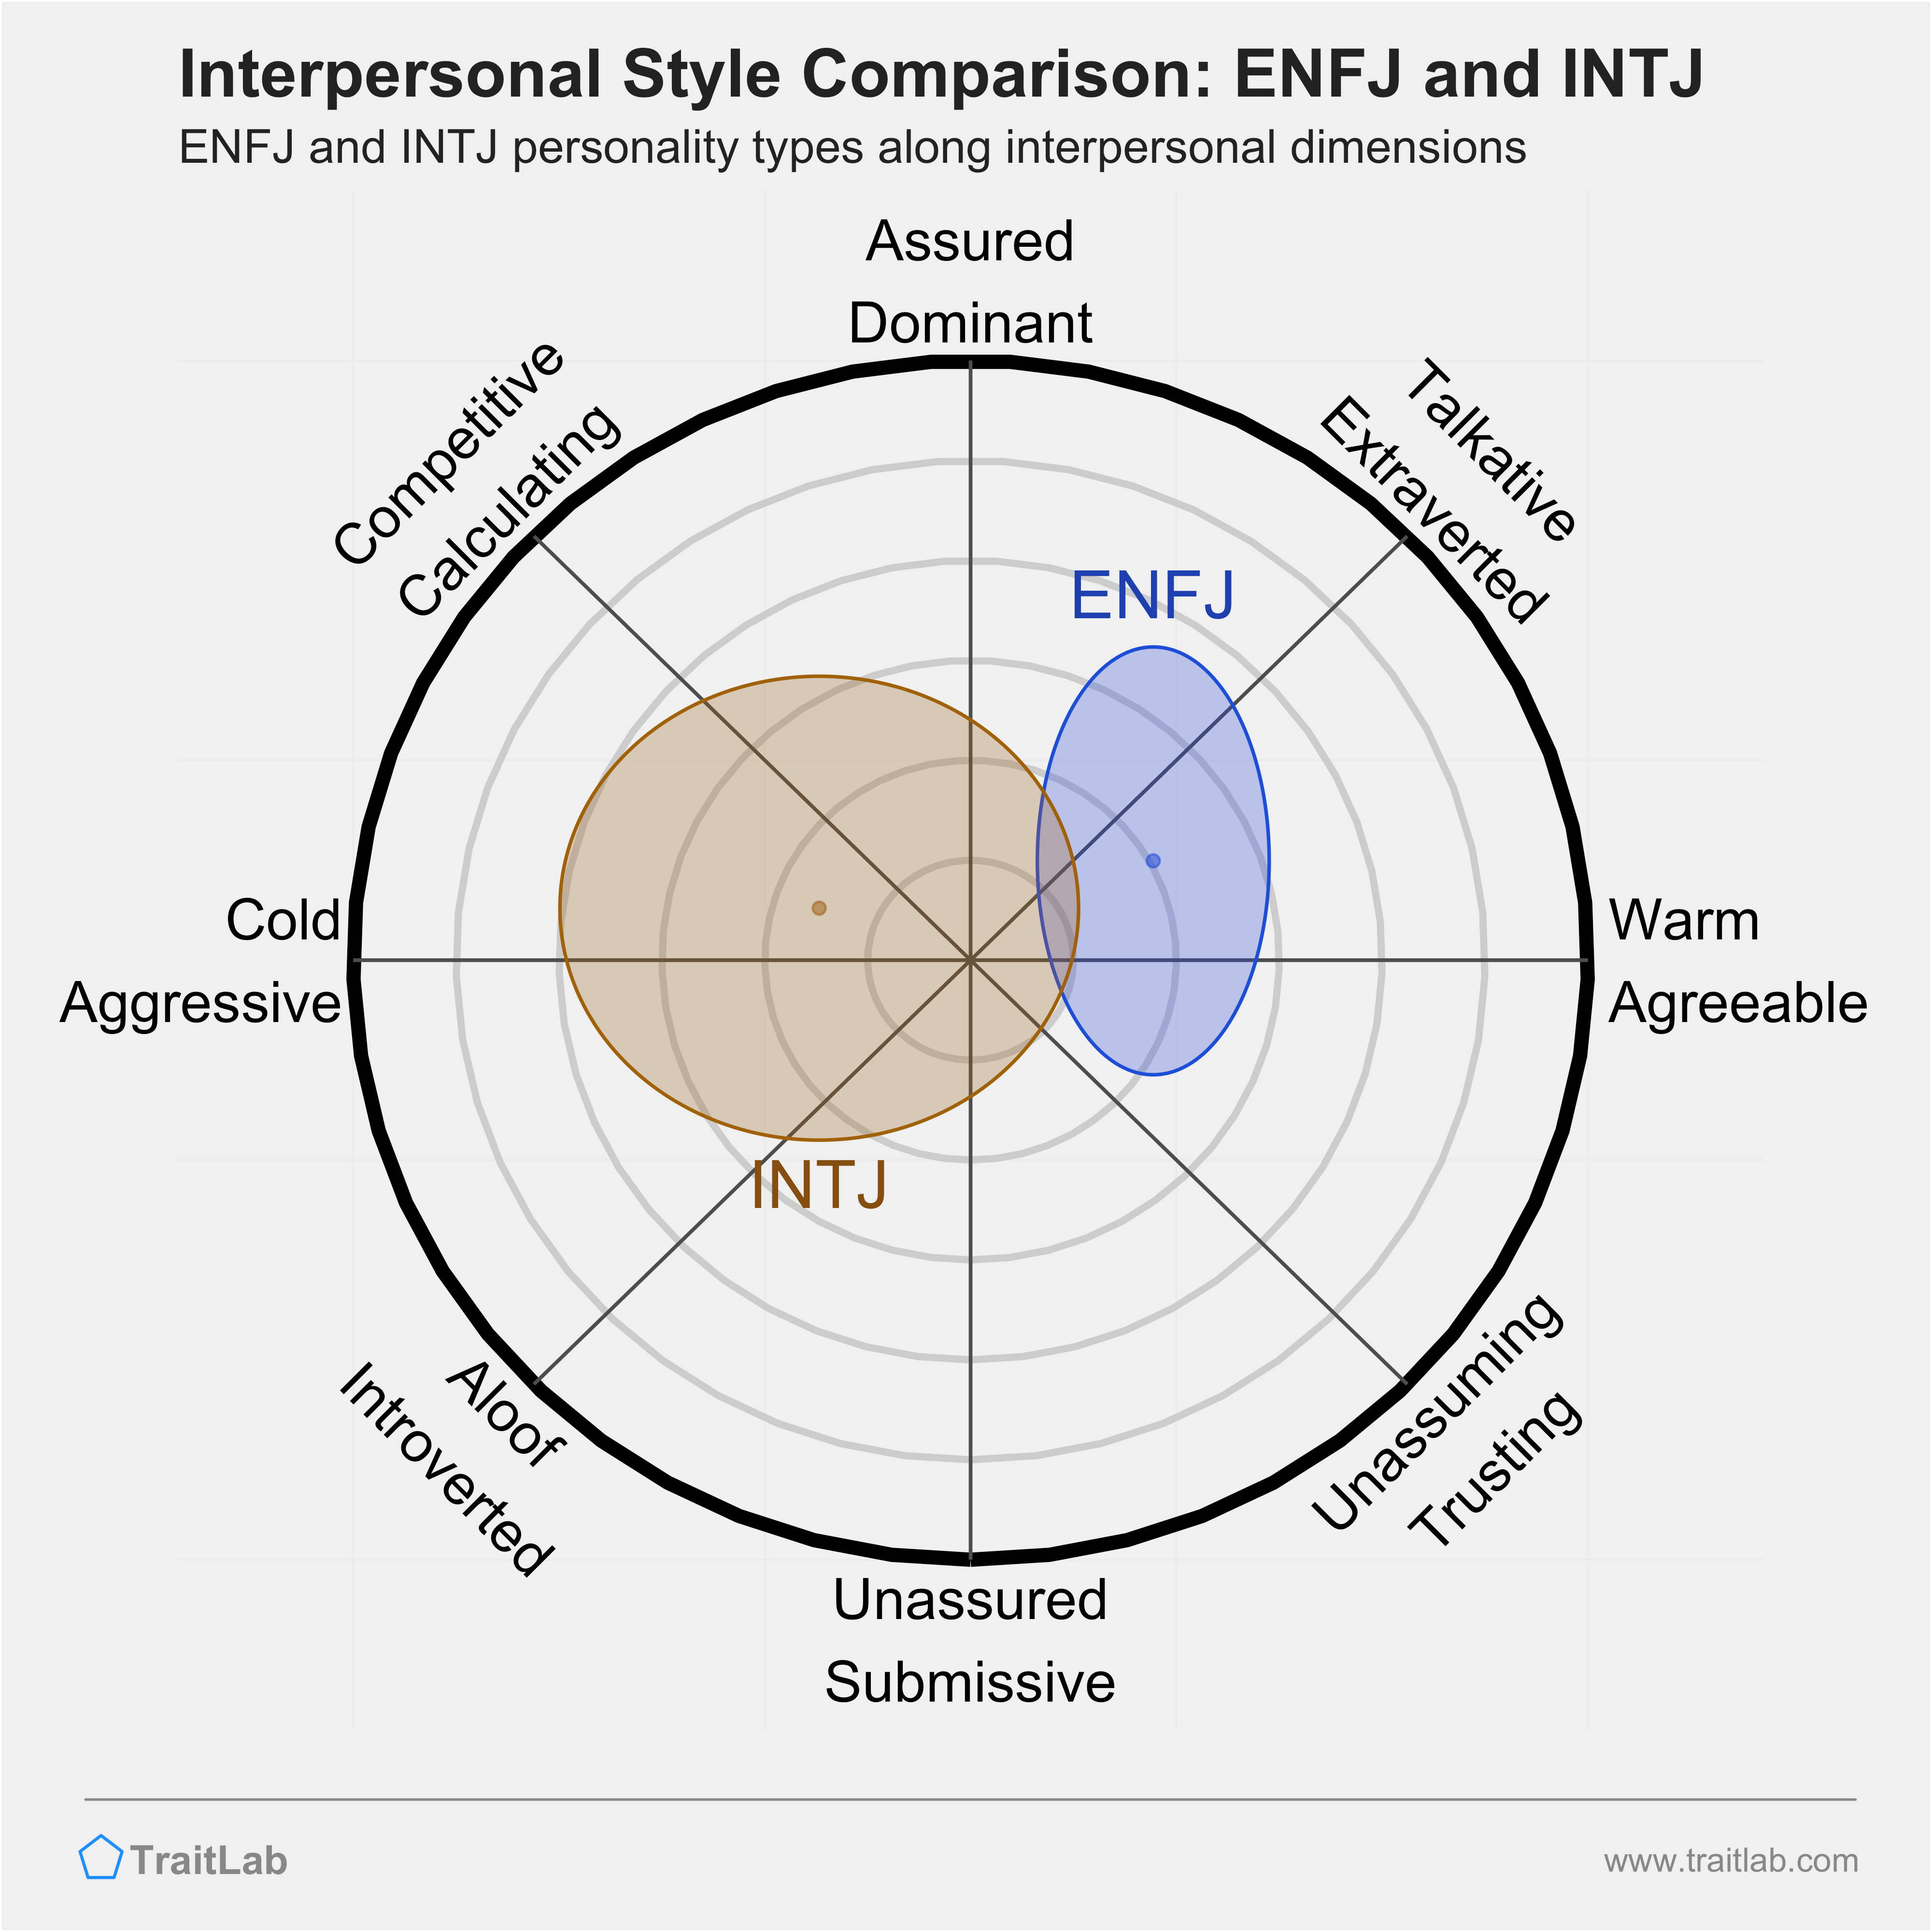 ENFJ and INTJ comparison across interpersonal dimensions